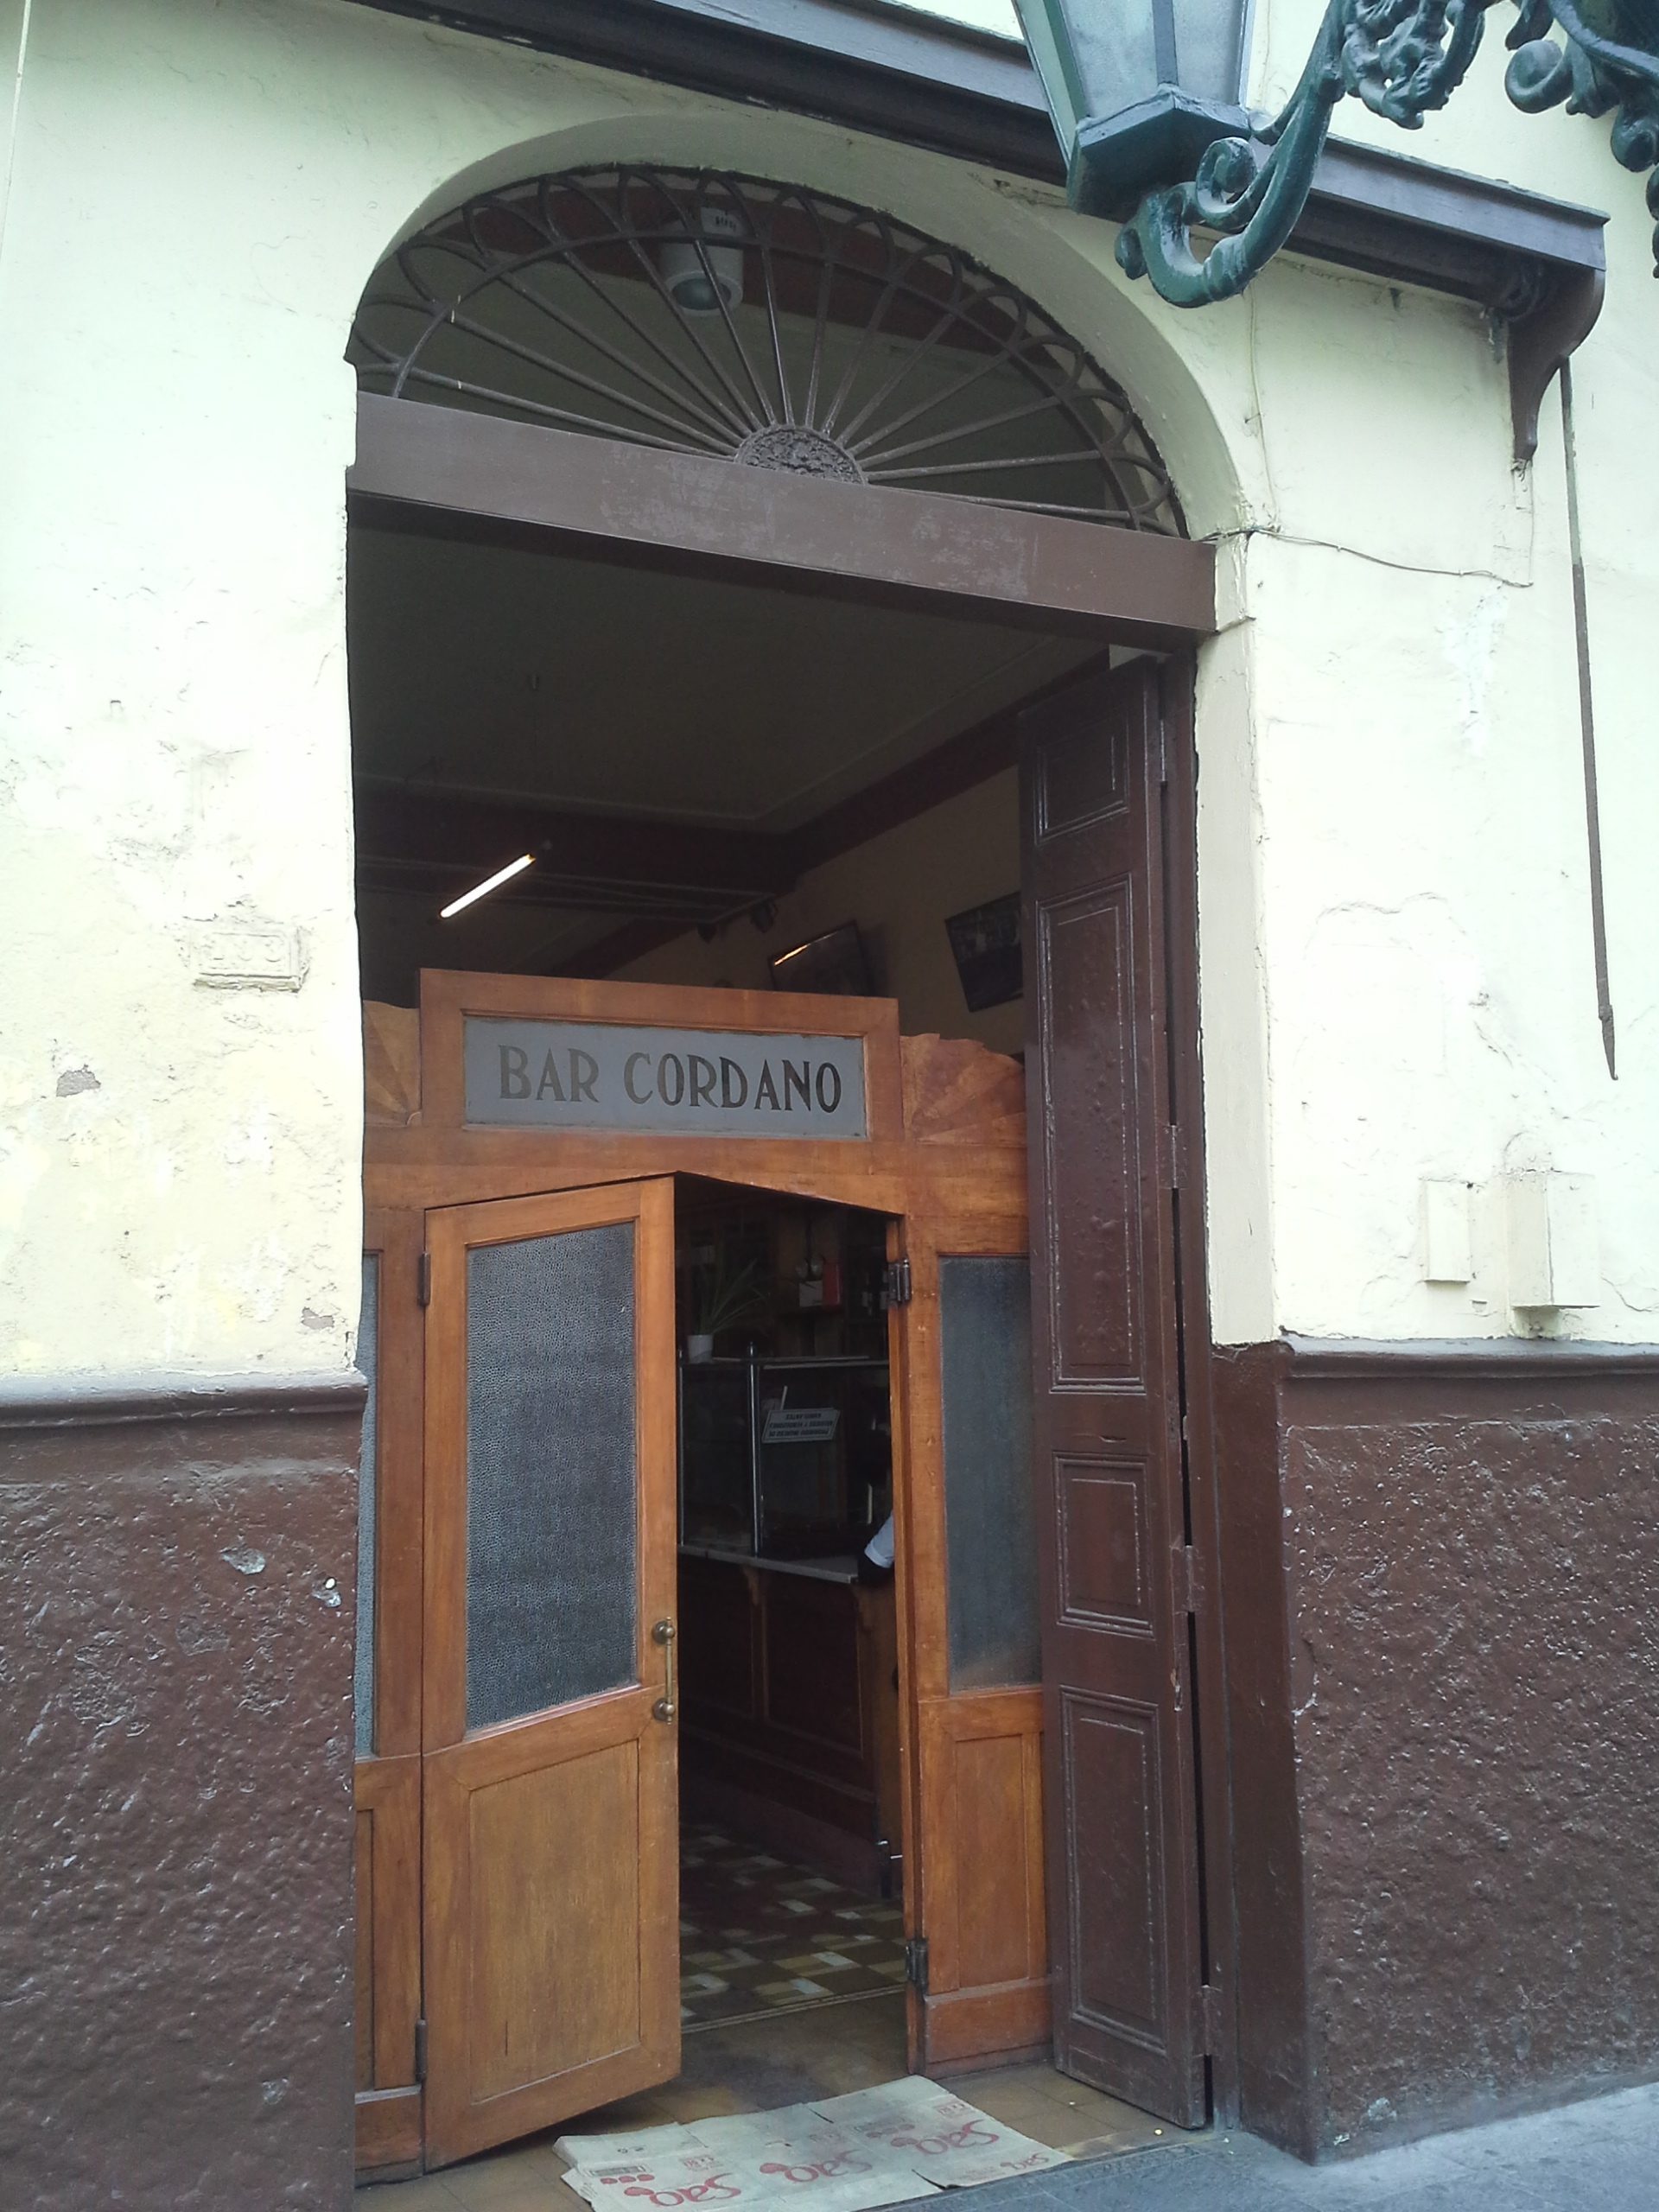 Cordano restaurant